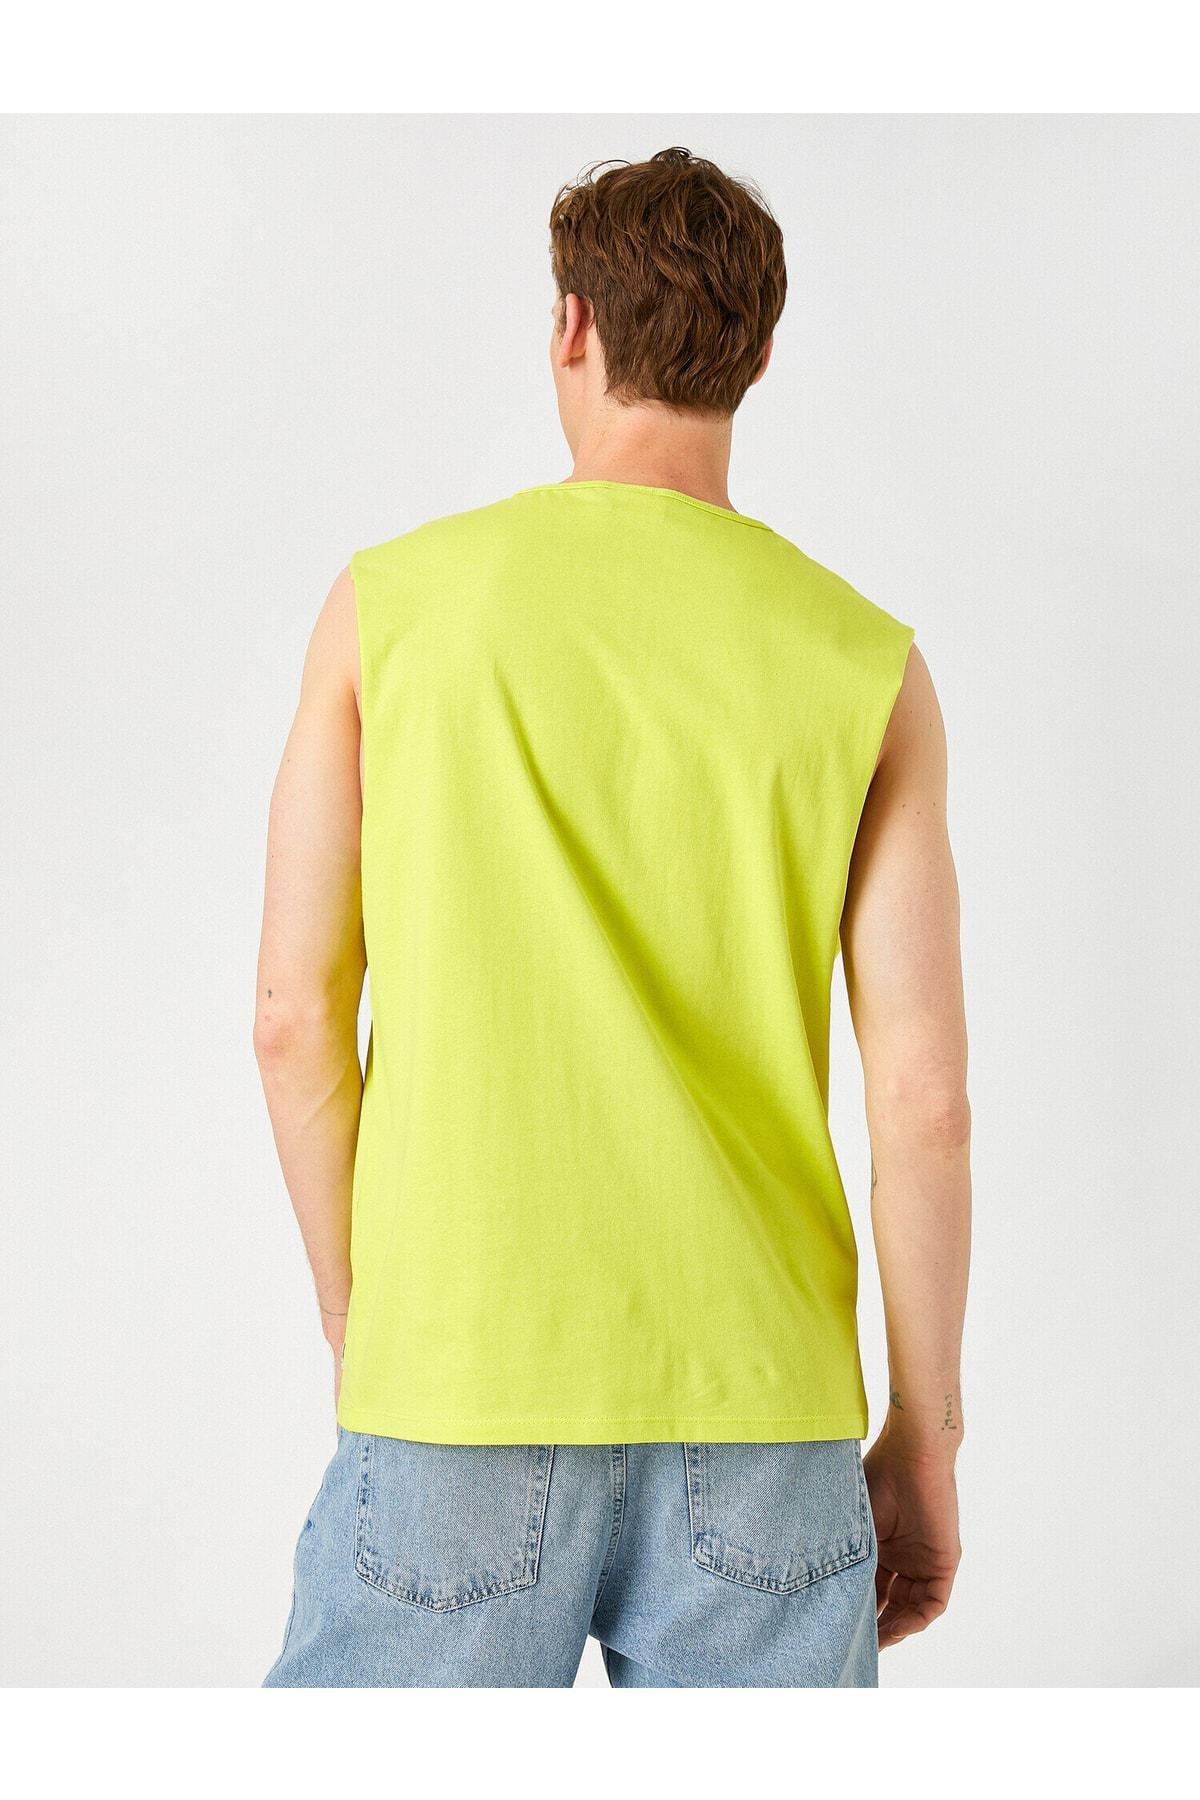 Koton - Green Printed Undershirt